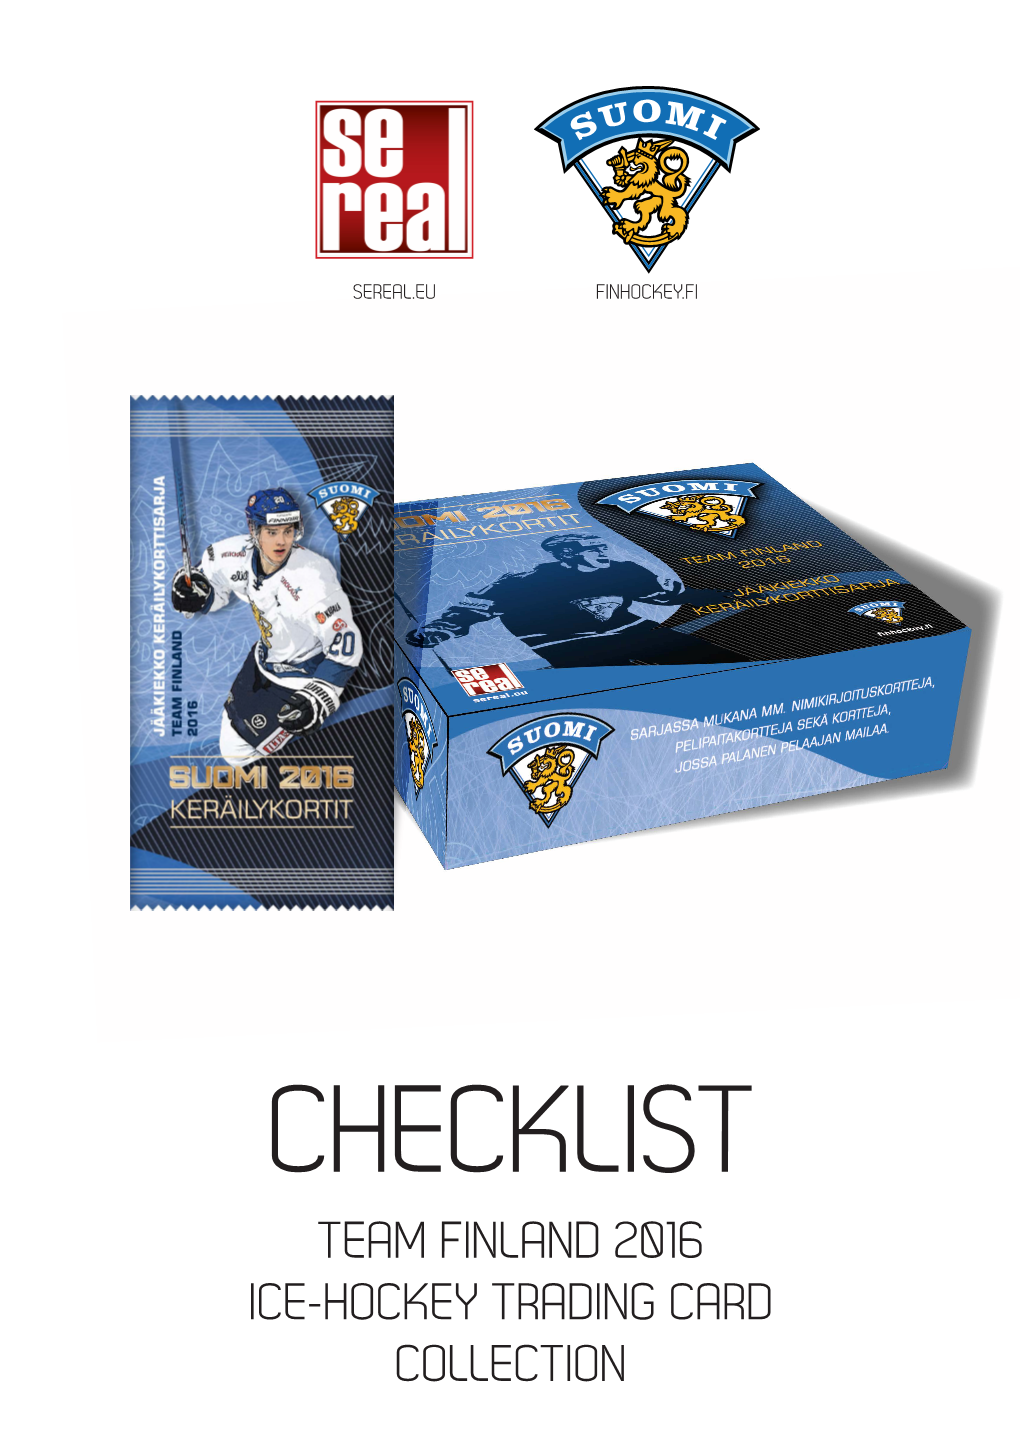 Team Finland 2016 Ice-Hockey Trading Card Collection Team Finland 2016 Ice-Hockey Trading Card Collection